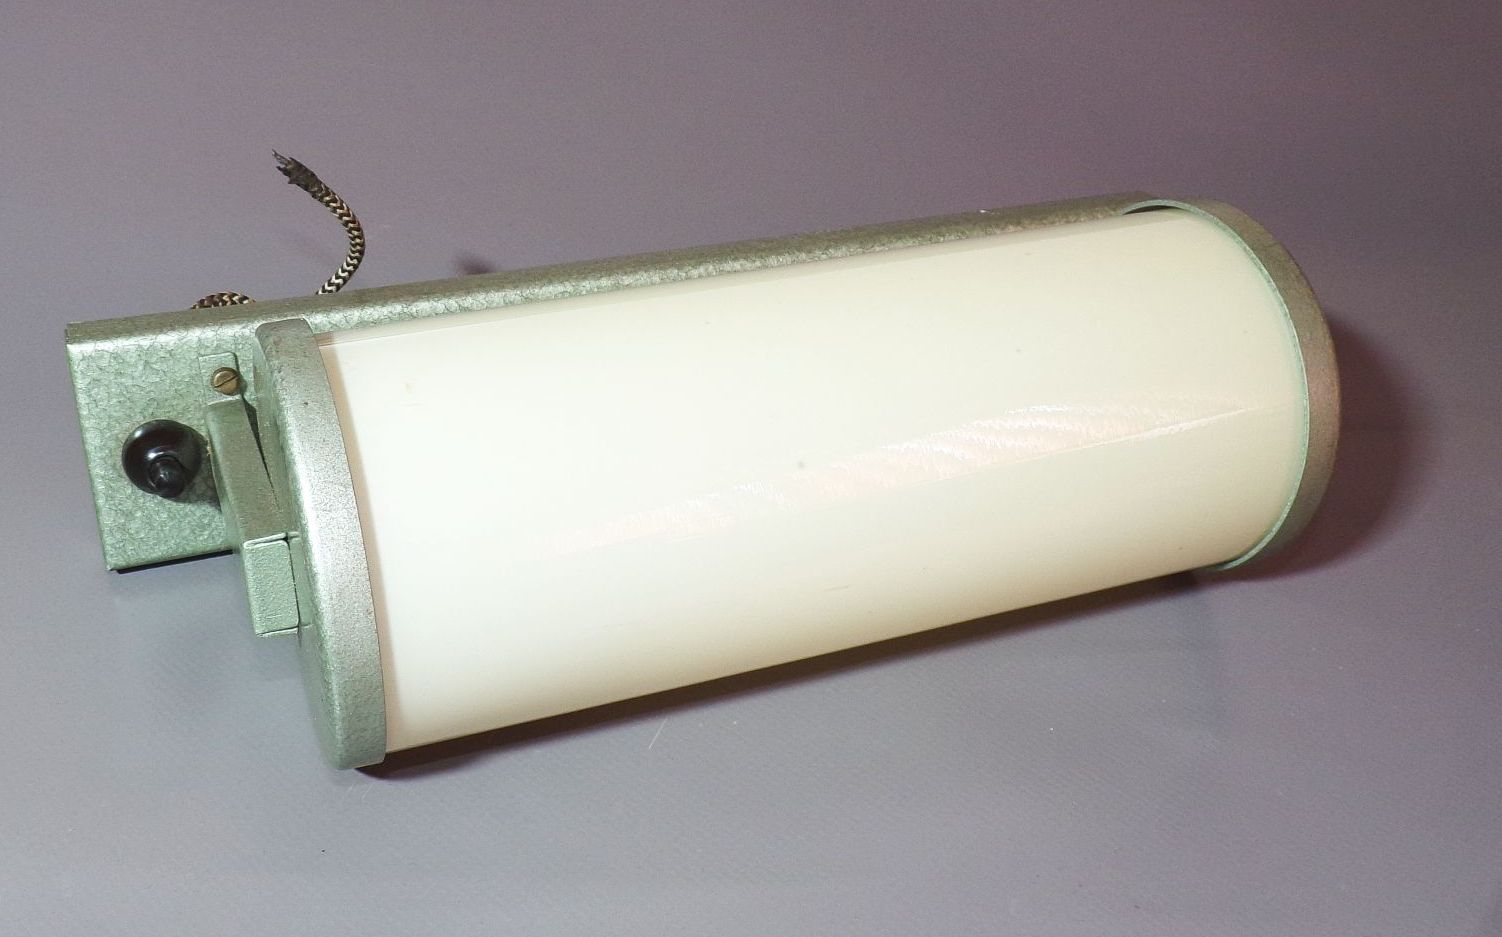 Alte Leselampe Wandlampe Deckenlampe vintage Leseleuchte